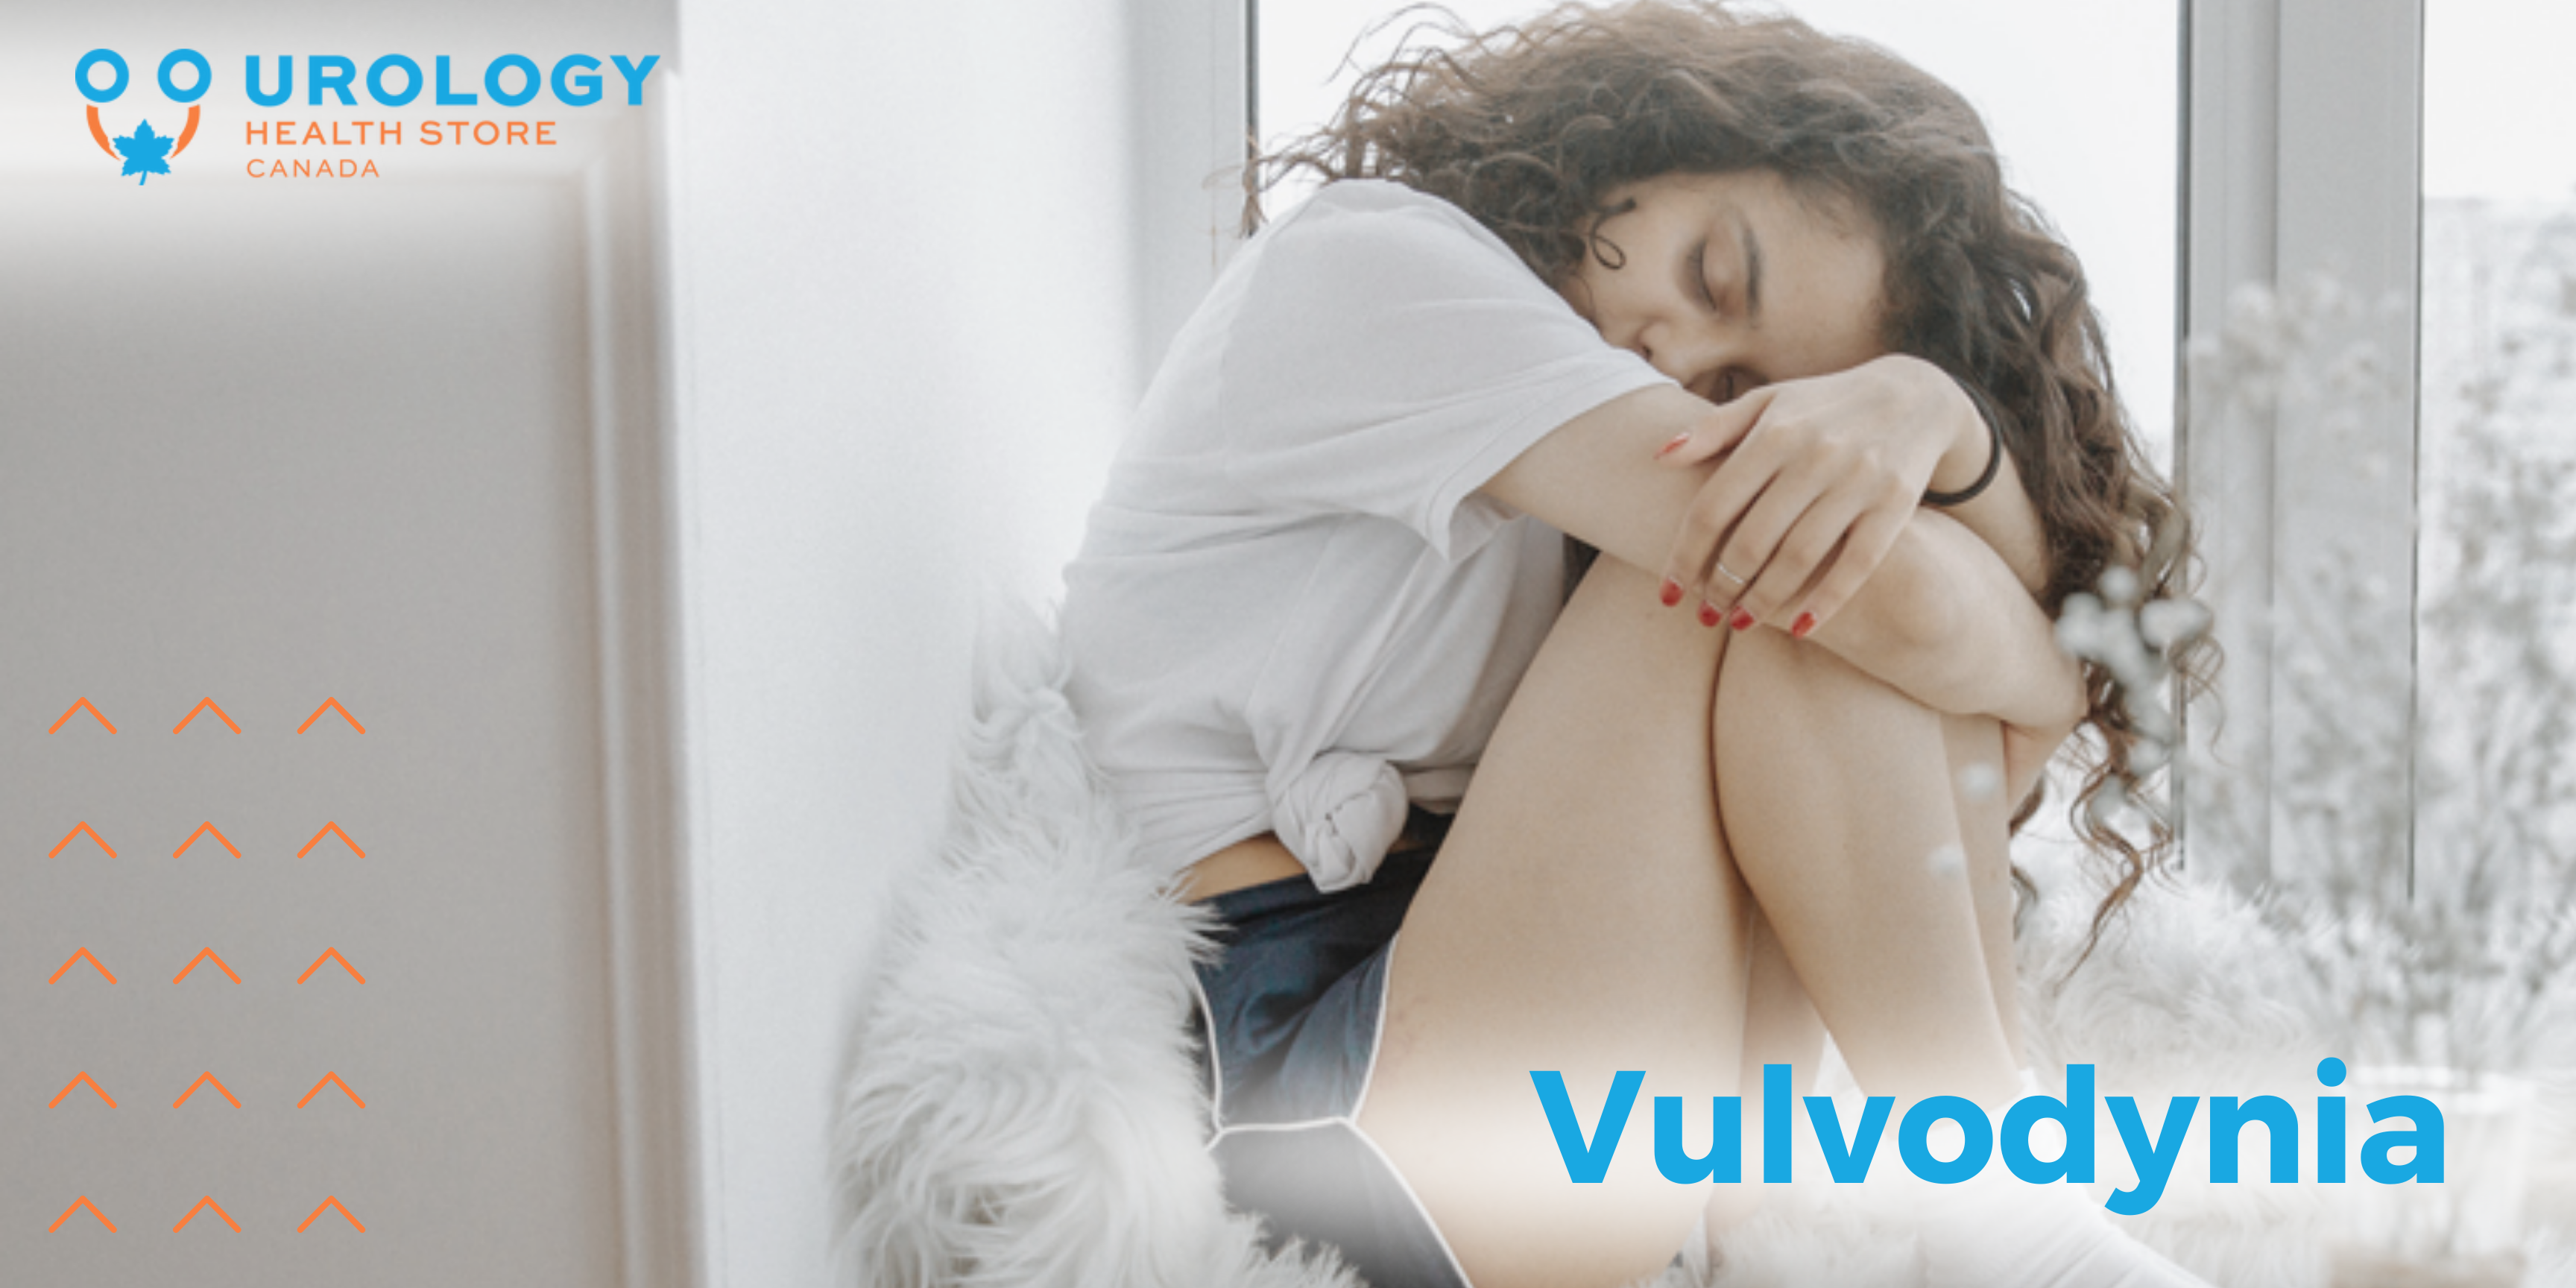 Vulvodynia Symptoms and Treatments